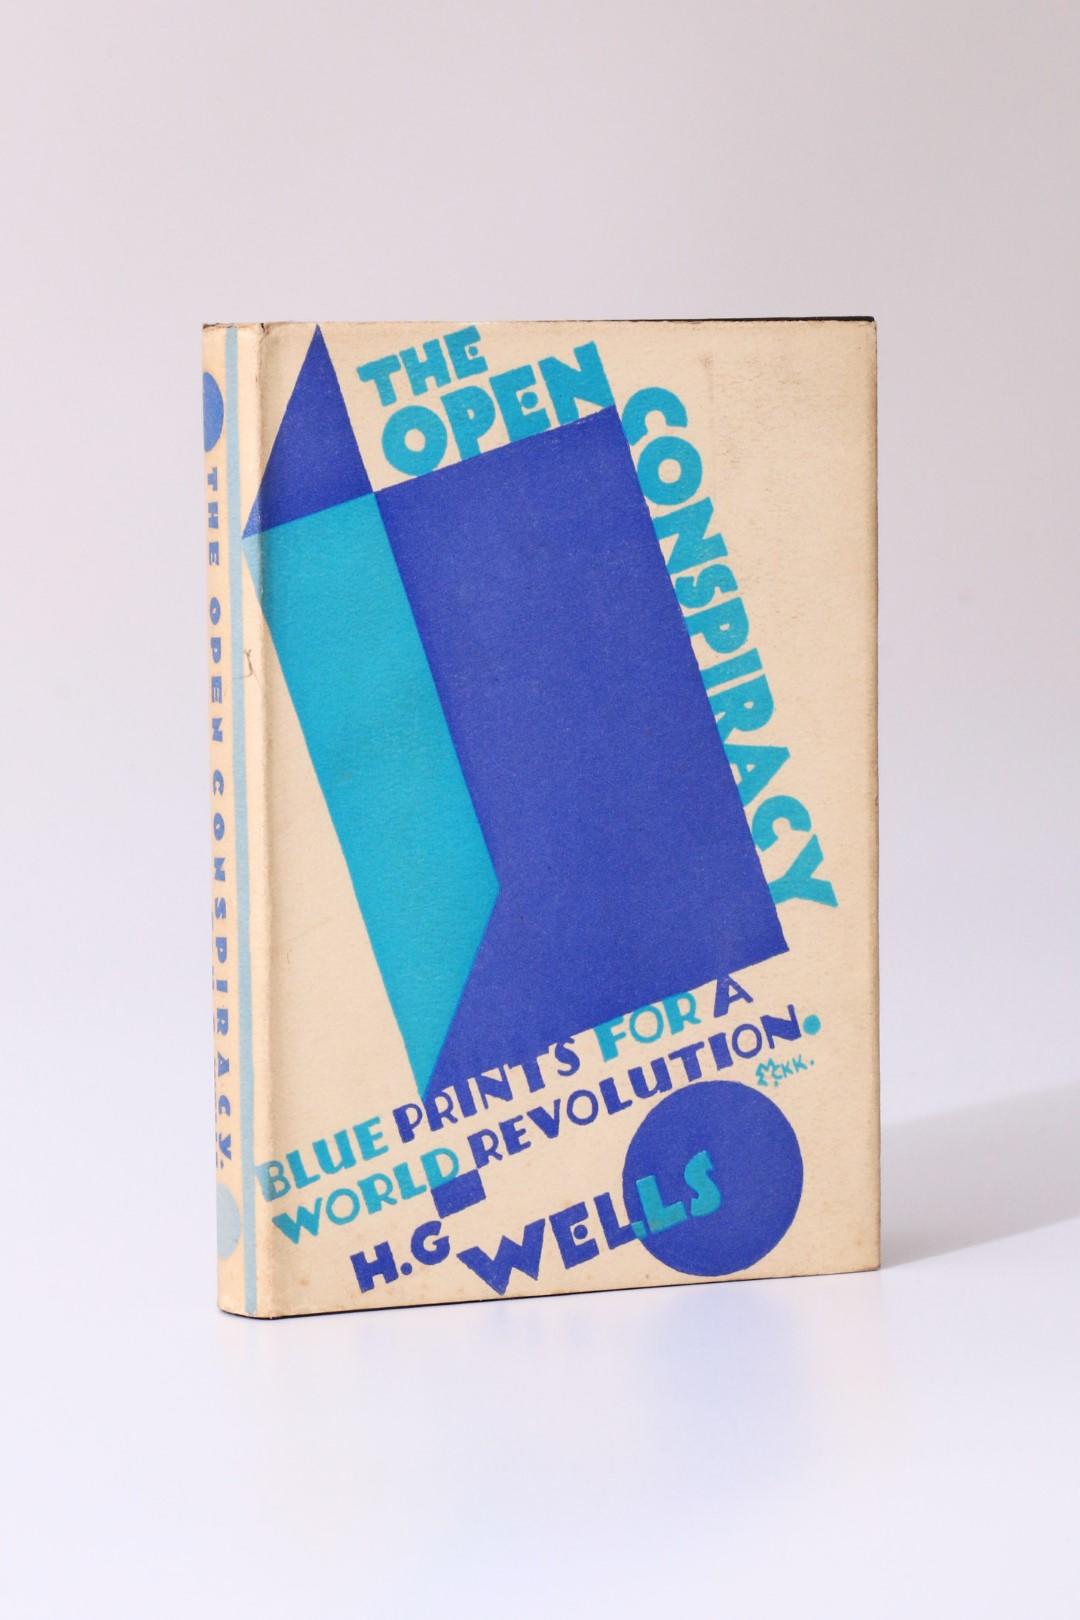 H.G. Wells - The Open Conspiracy - Gollancz, 1928, First Edition.